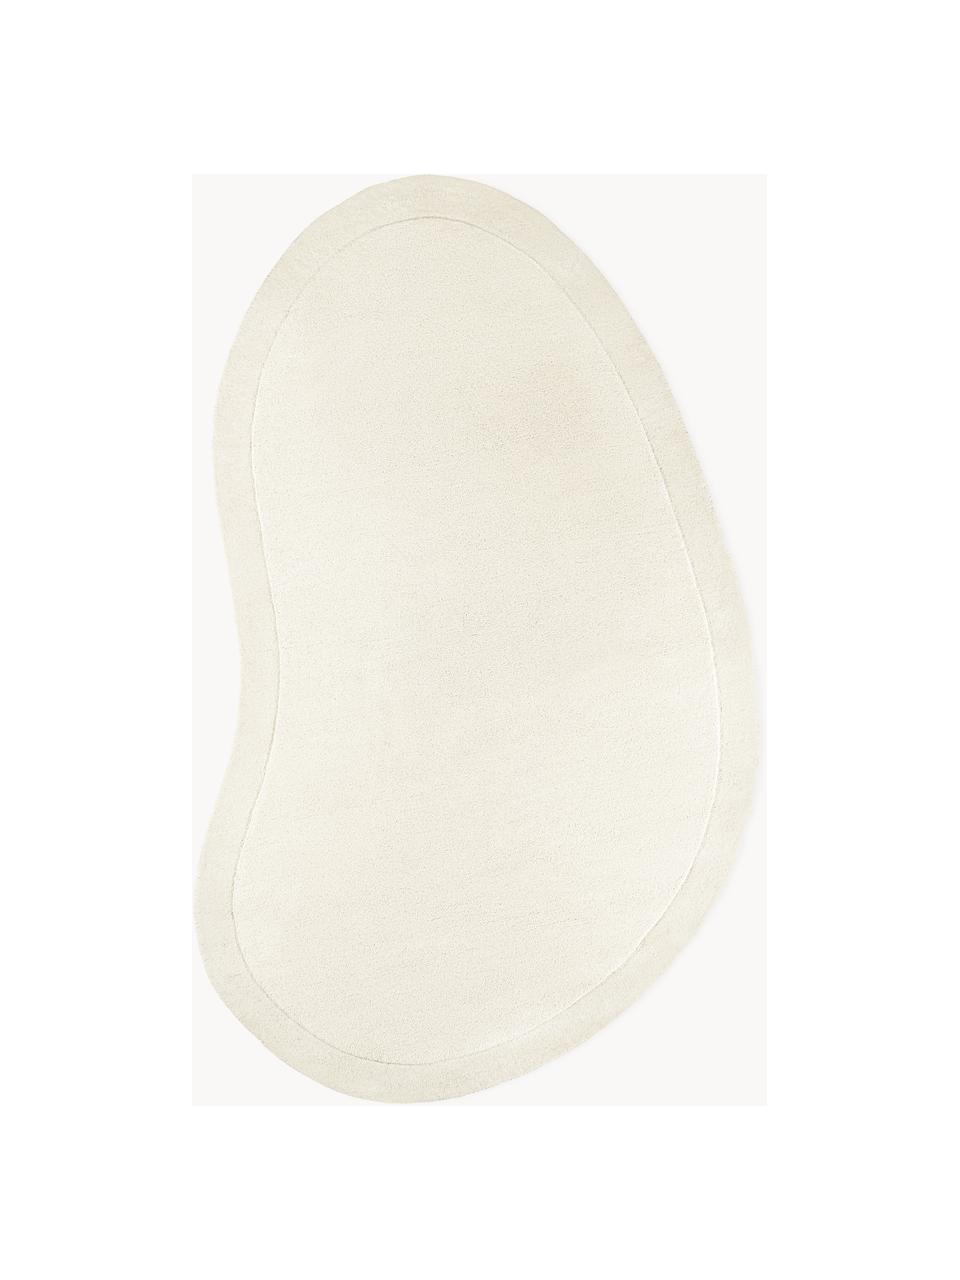 Tappeto in lana dalla forma organica Kadey, Bianco crema, Larg. 120 x Lung. 180 cm (taglia S)